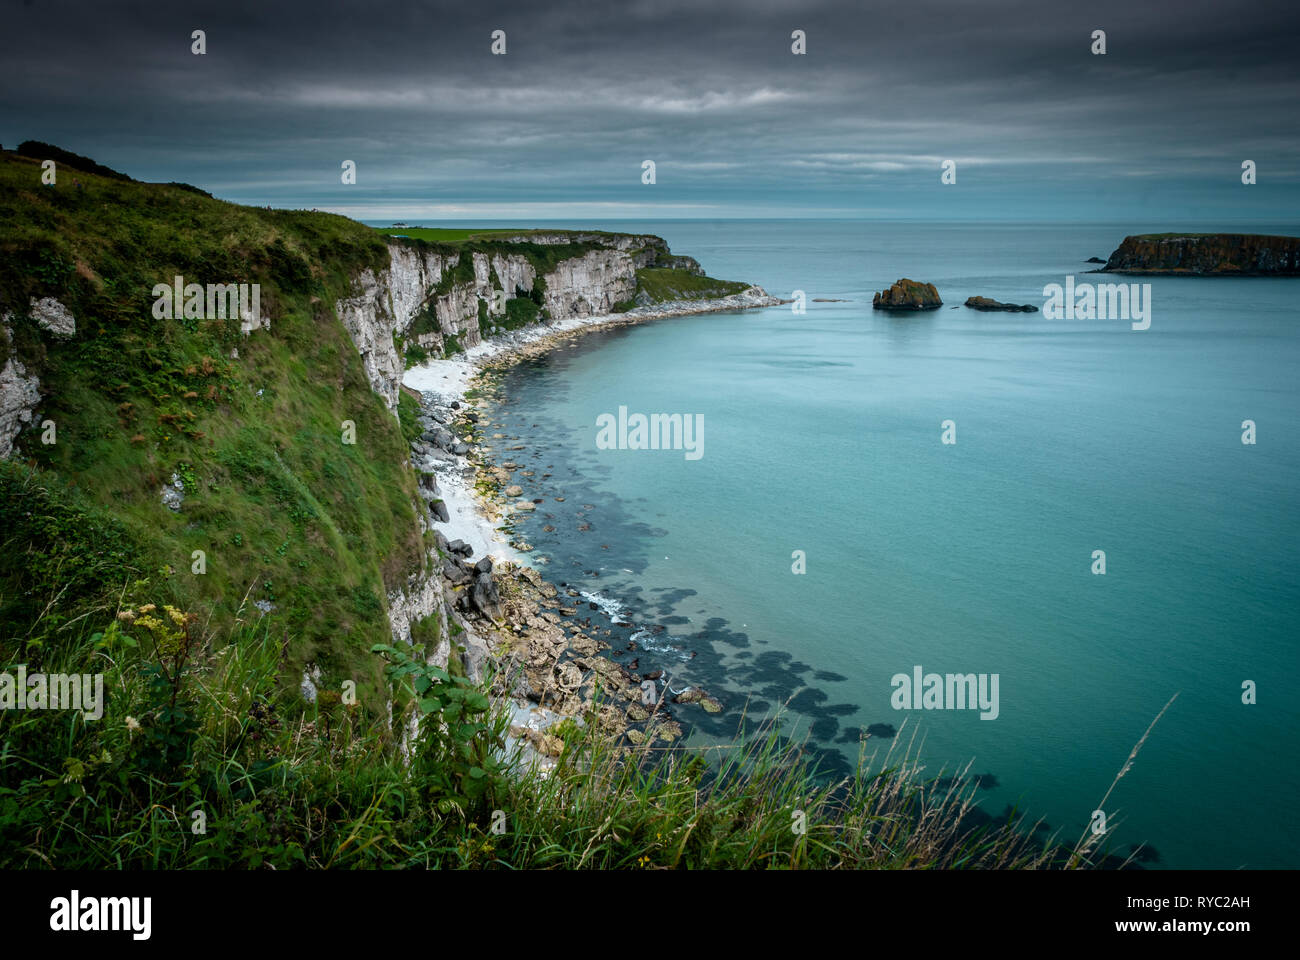 The Northern Ireland Coast on the Atlantic Ocean Stock Photo